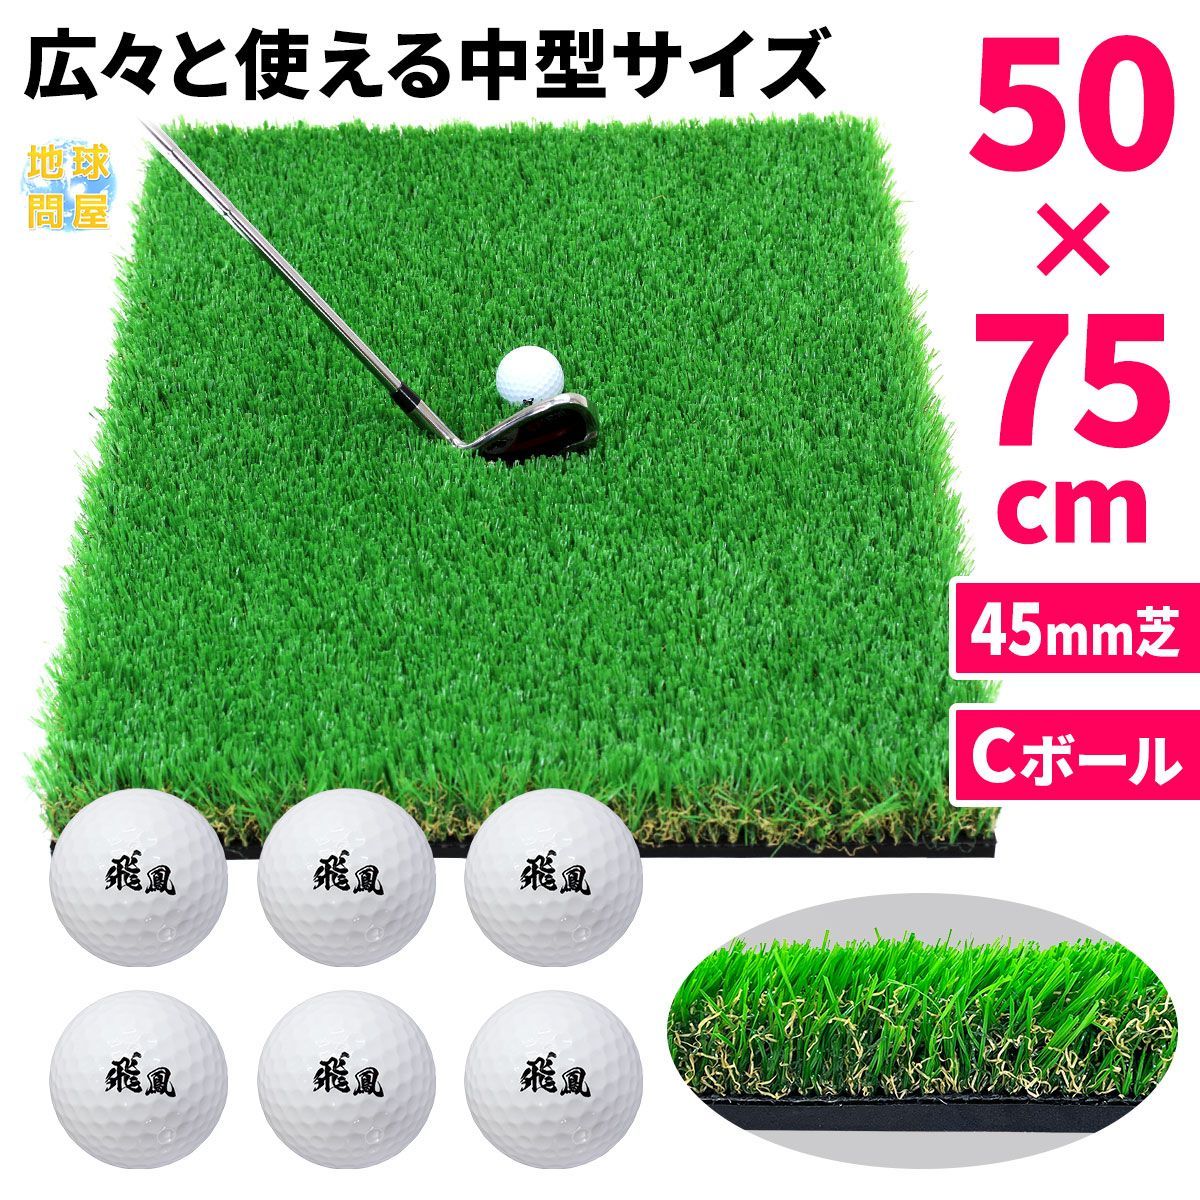 GolfStyle ゴルフマット 45mm ラフ芝 ゴルフ 練習 マット 素振り 